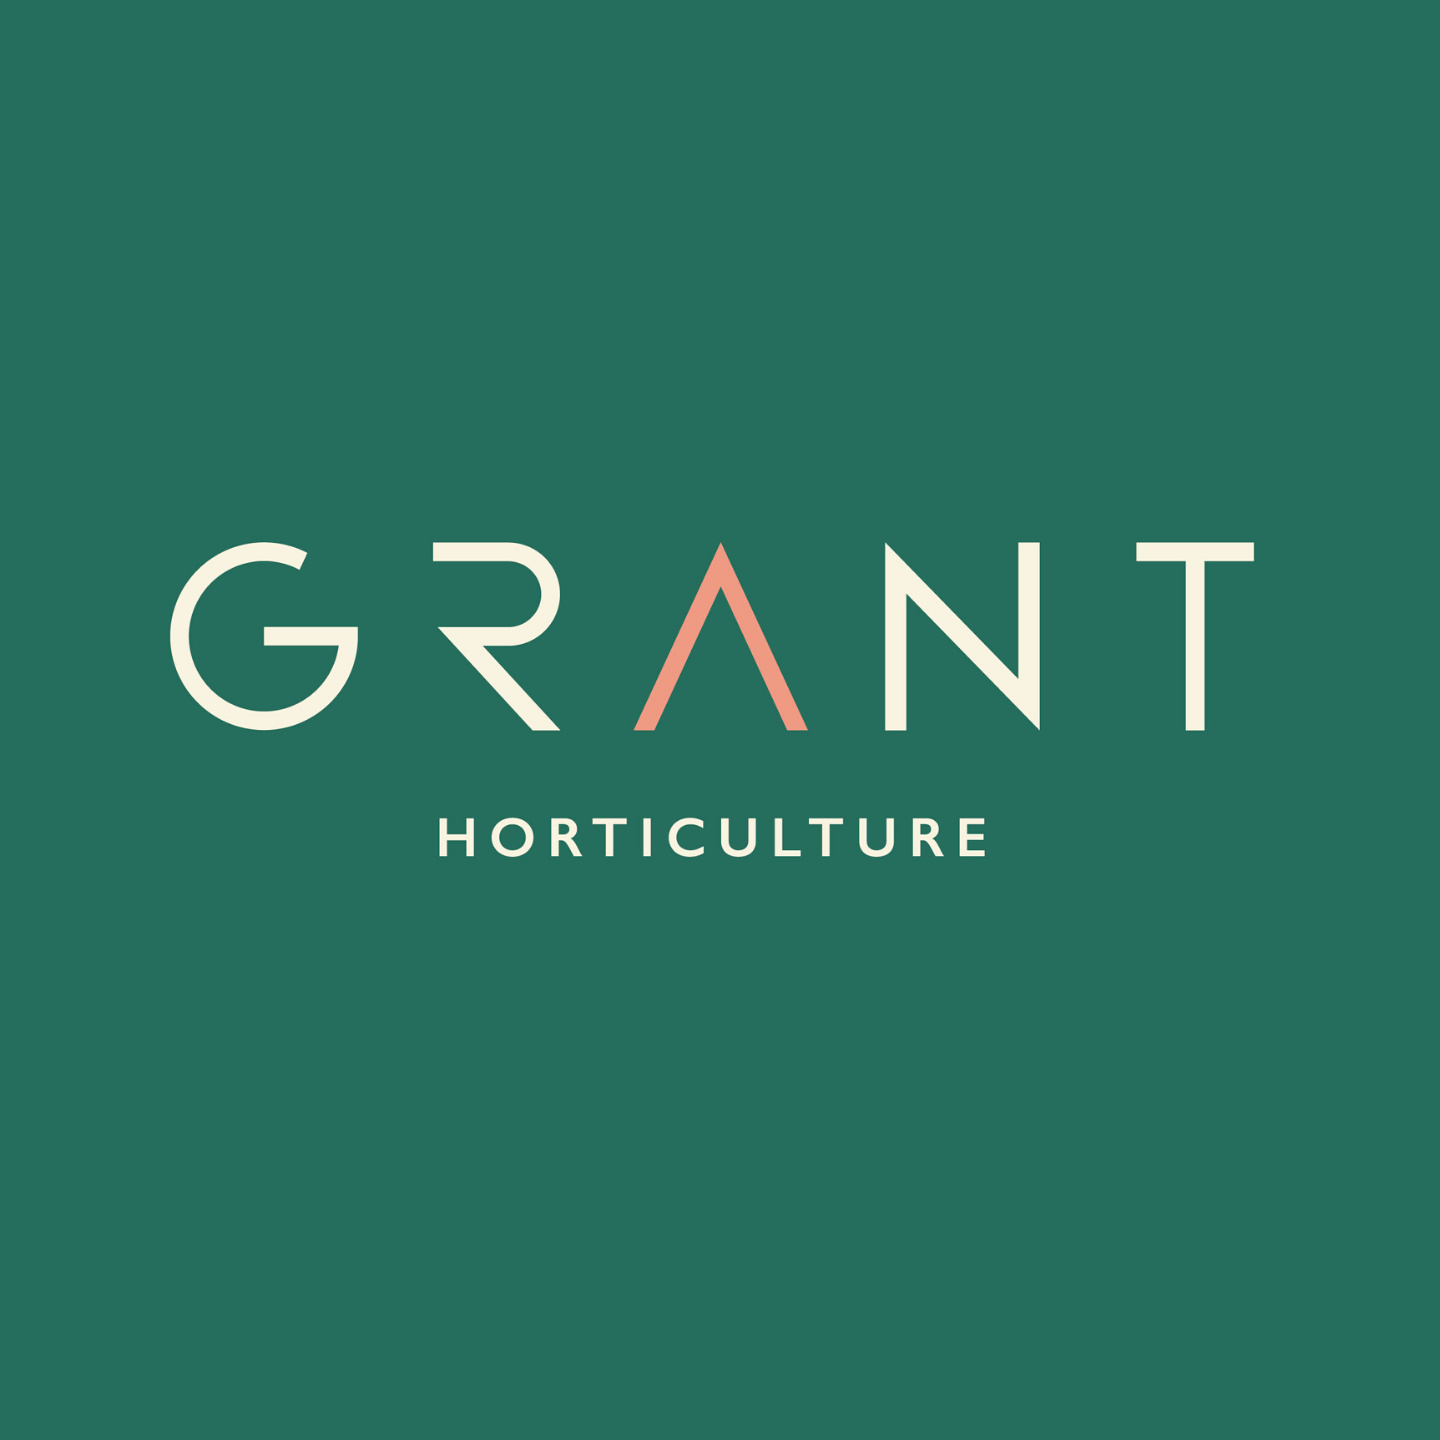 Grant Horticulture Ltd